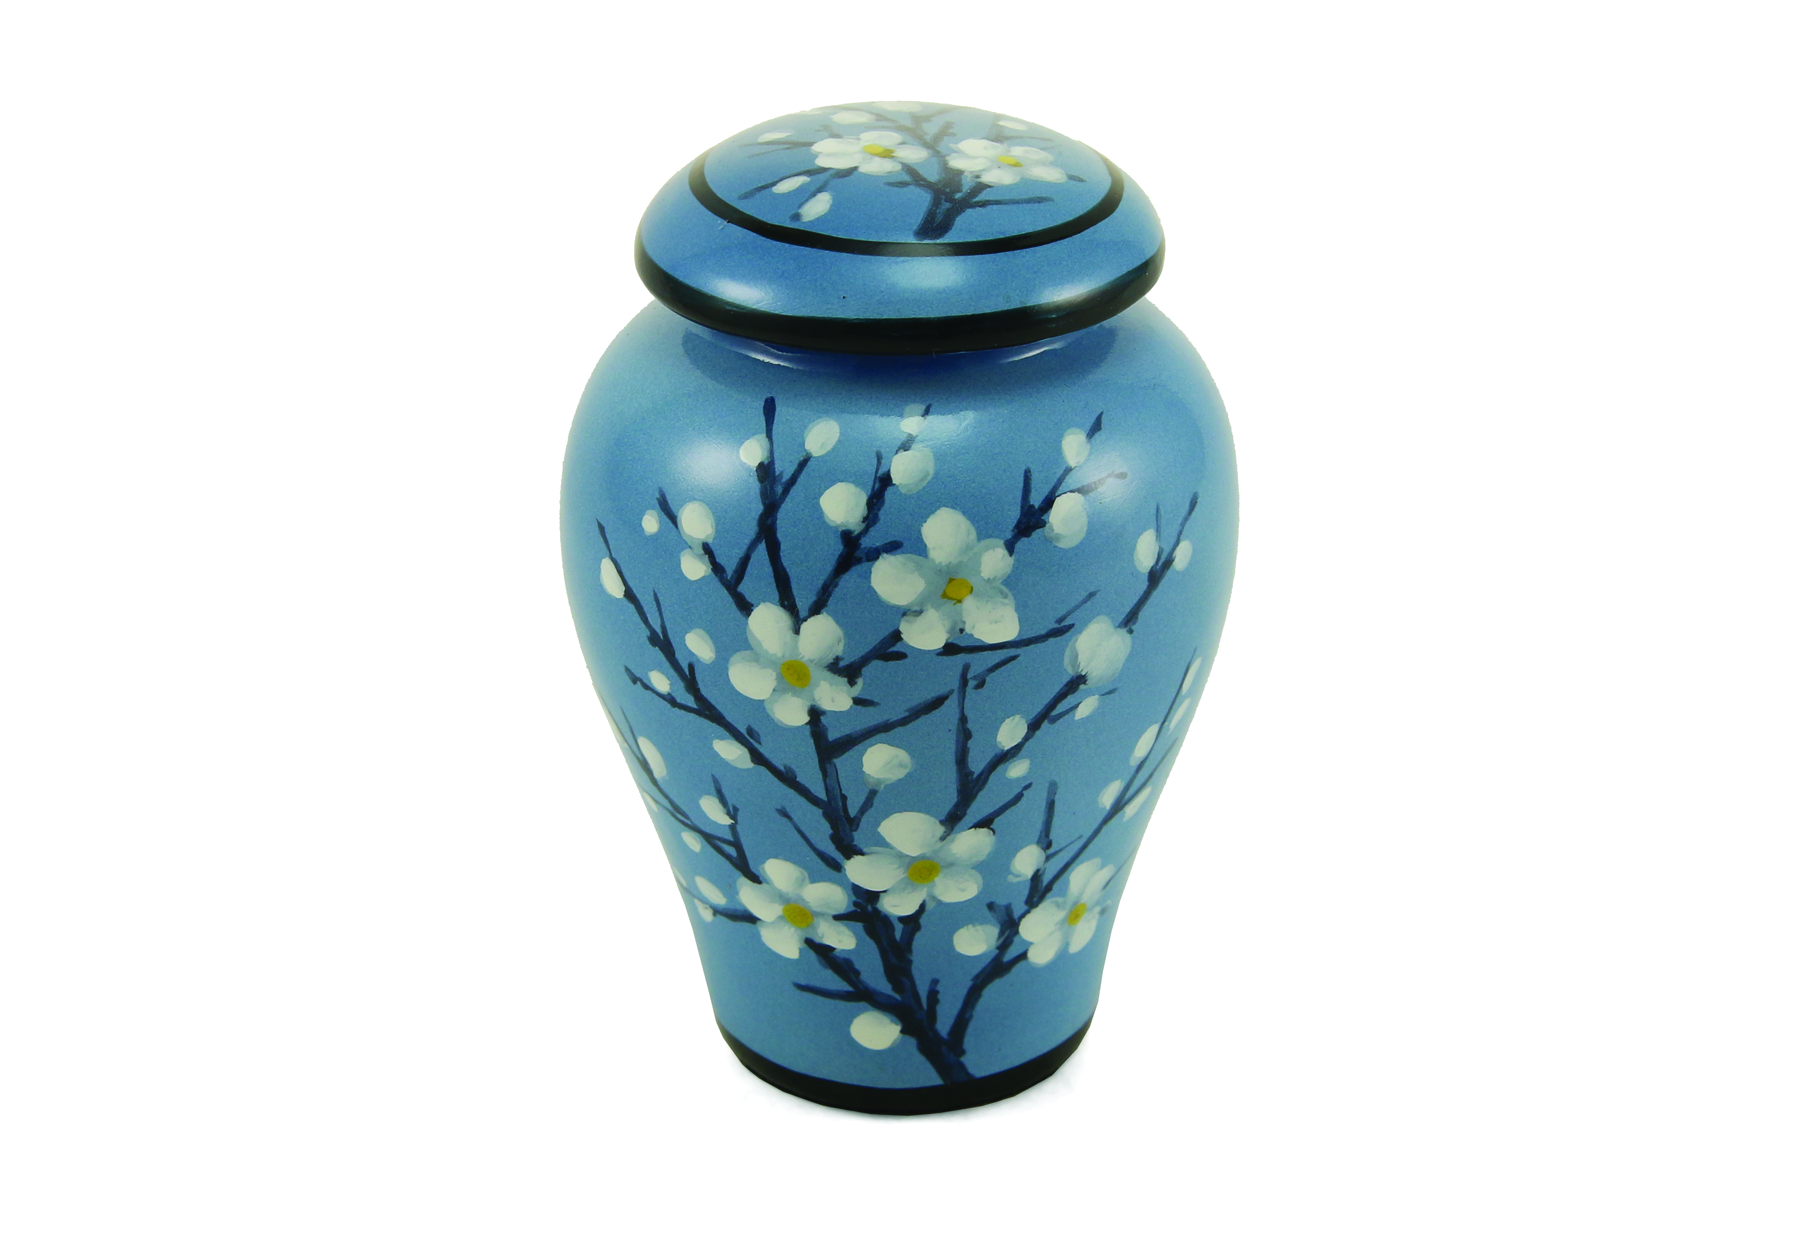 AUC455K-Floral-Ceramic-Plum-Blossom-Keepsake